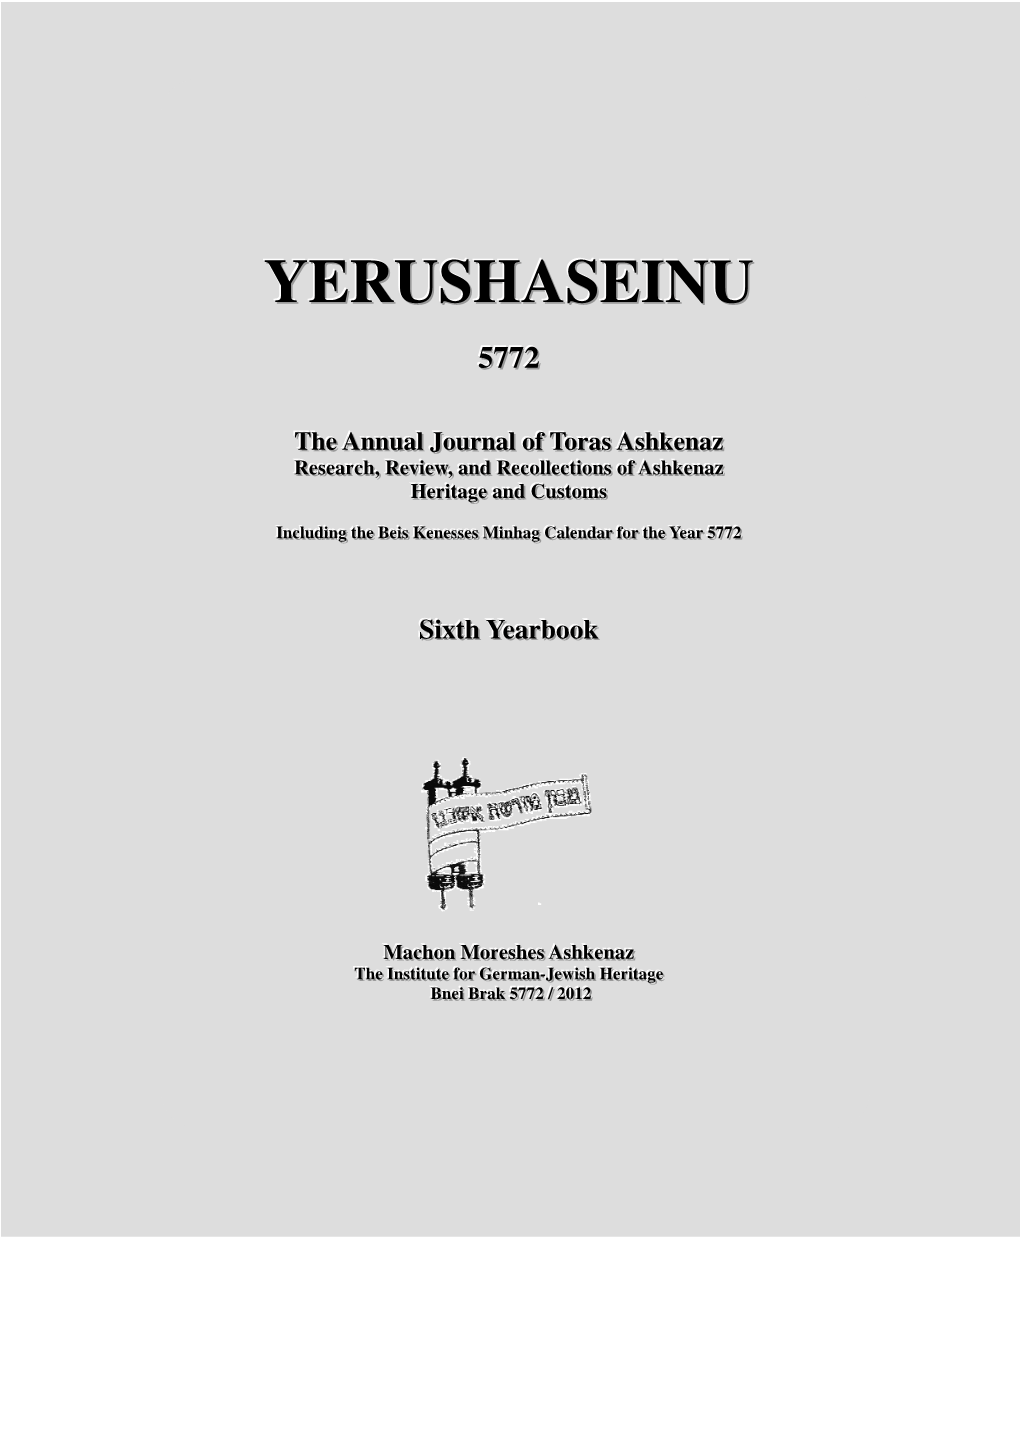 Yerushaseinu Published by Machon Moreshes Ashkenaz, the Institute for German-Jewish Heritage